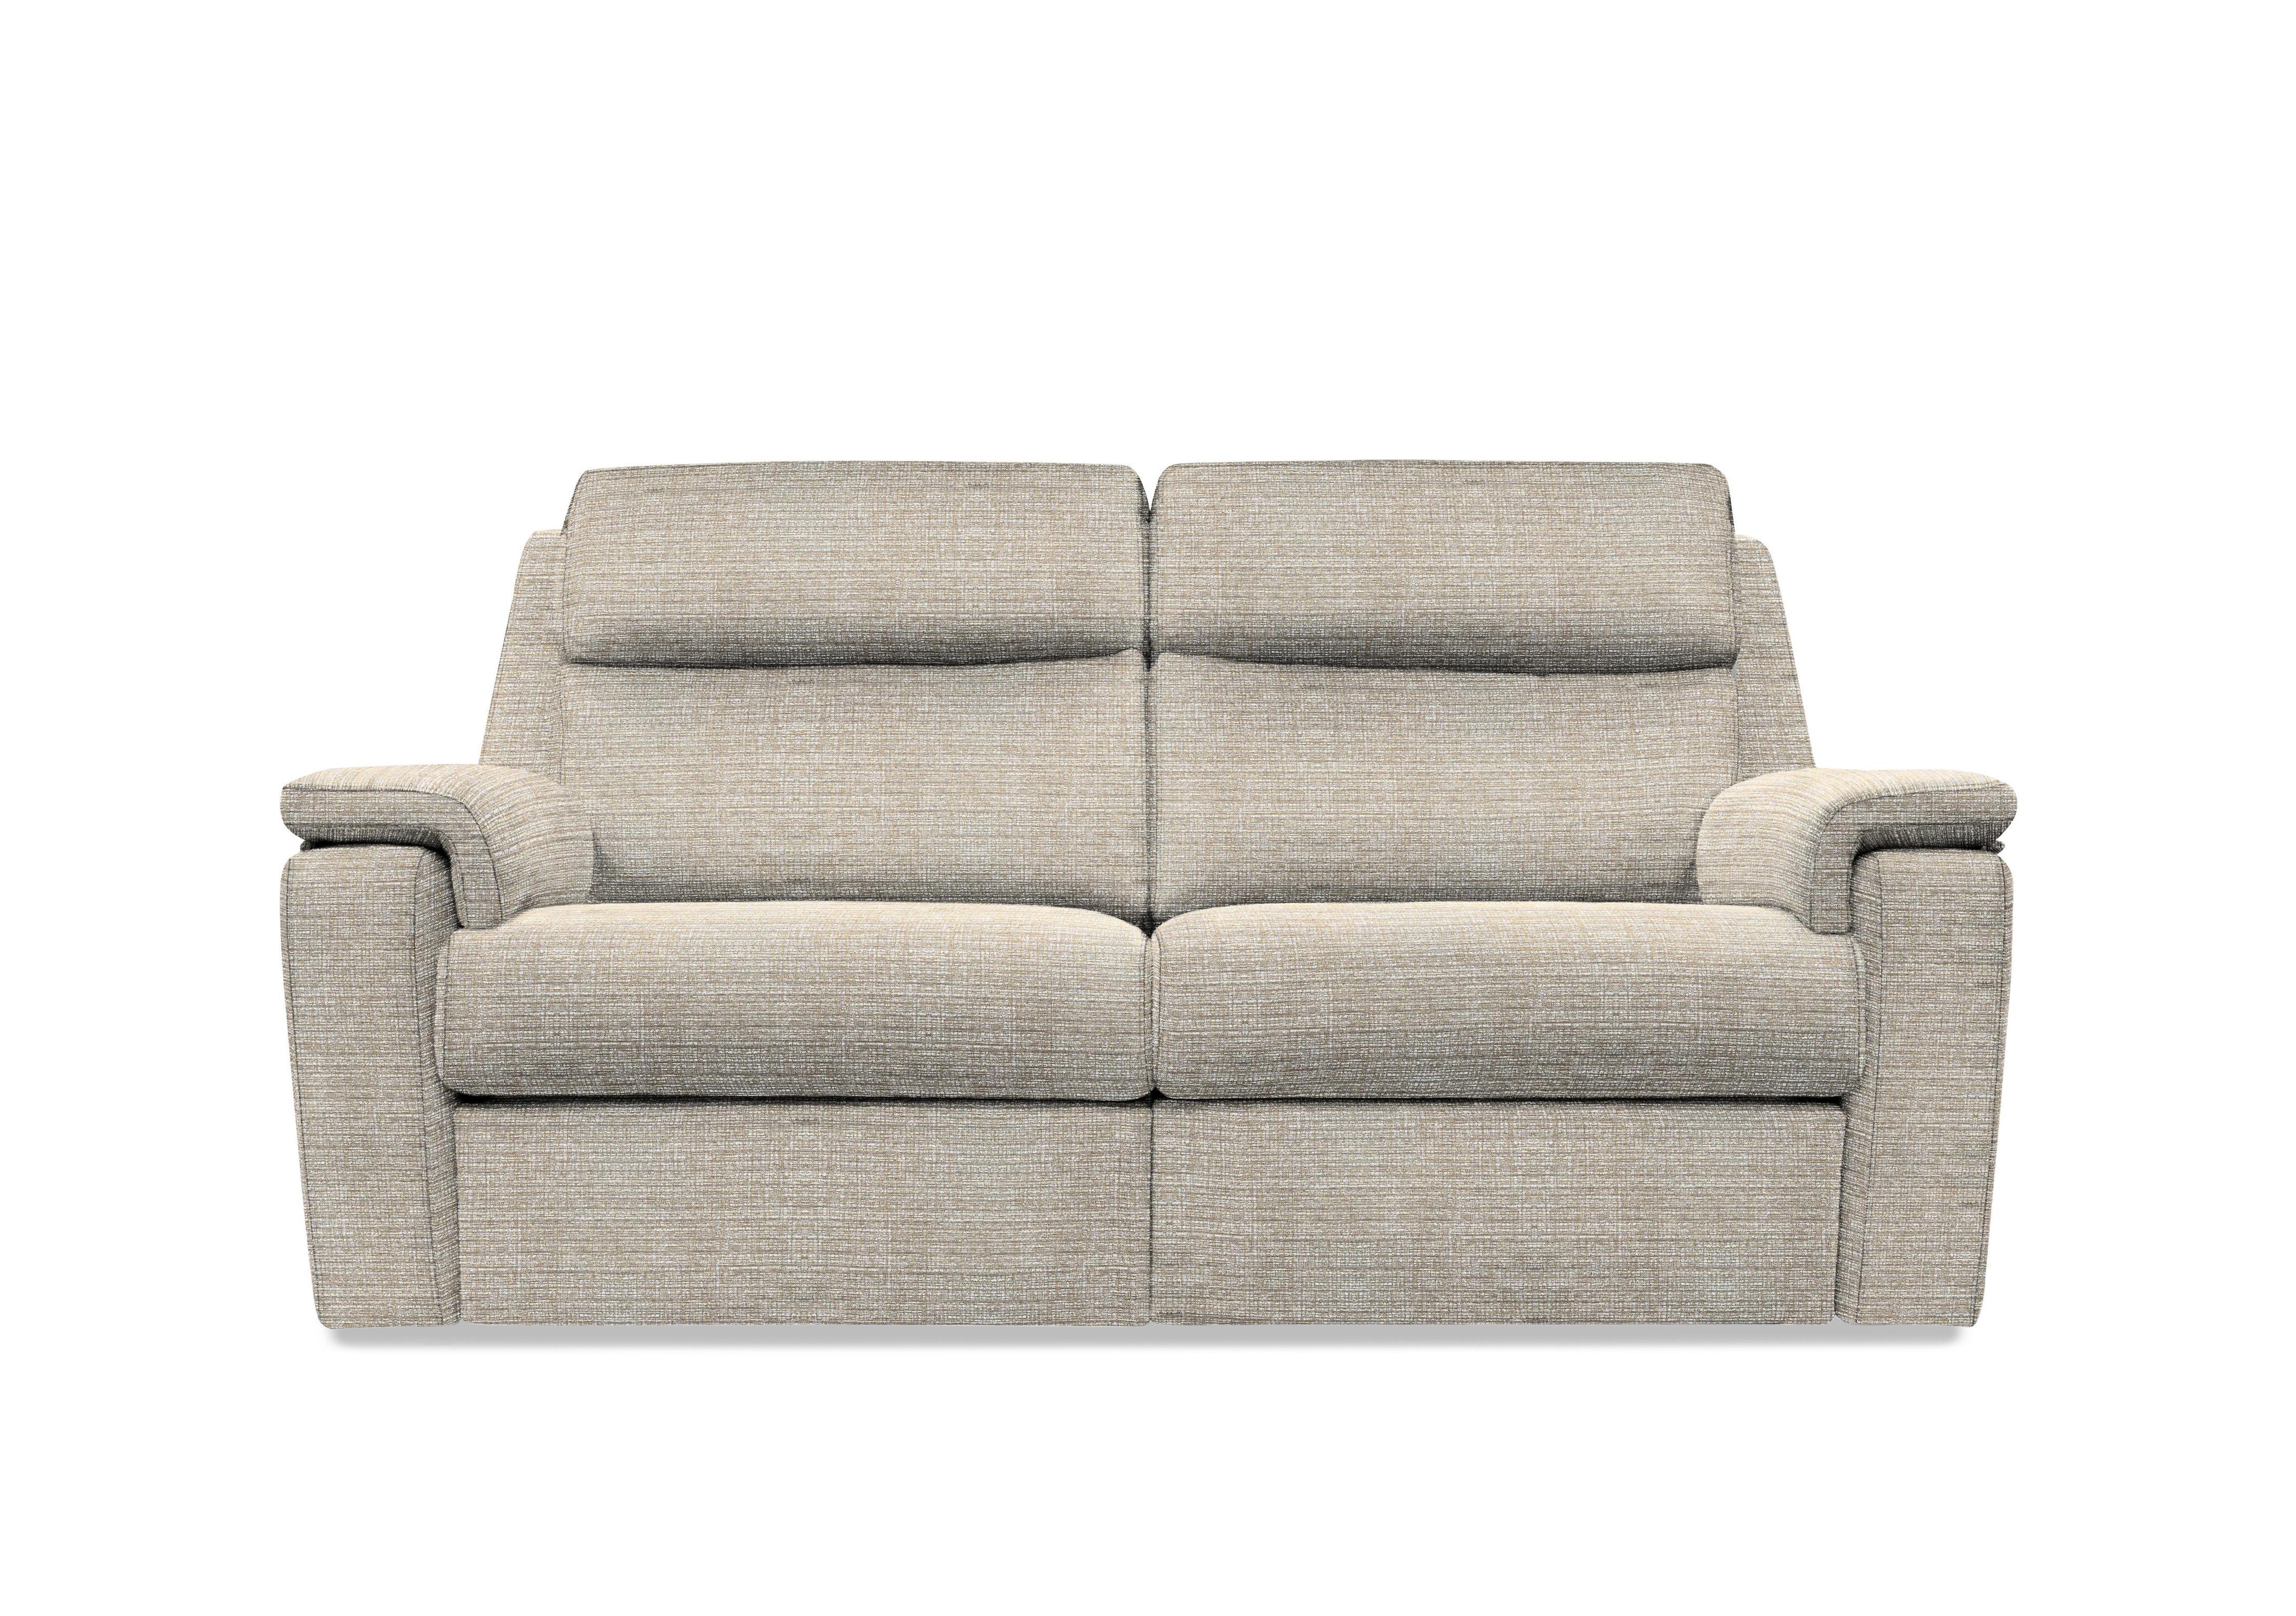 Thornbury 3 Seater Fabric Sofa in A006 Yarn Shale on Furniture Village